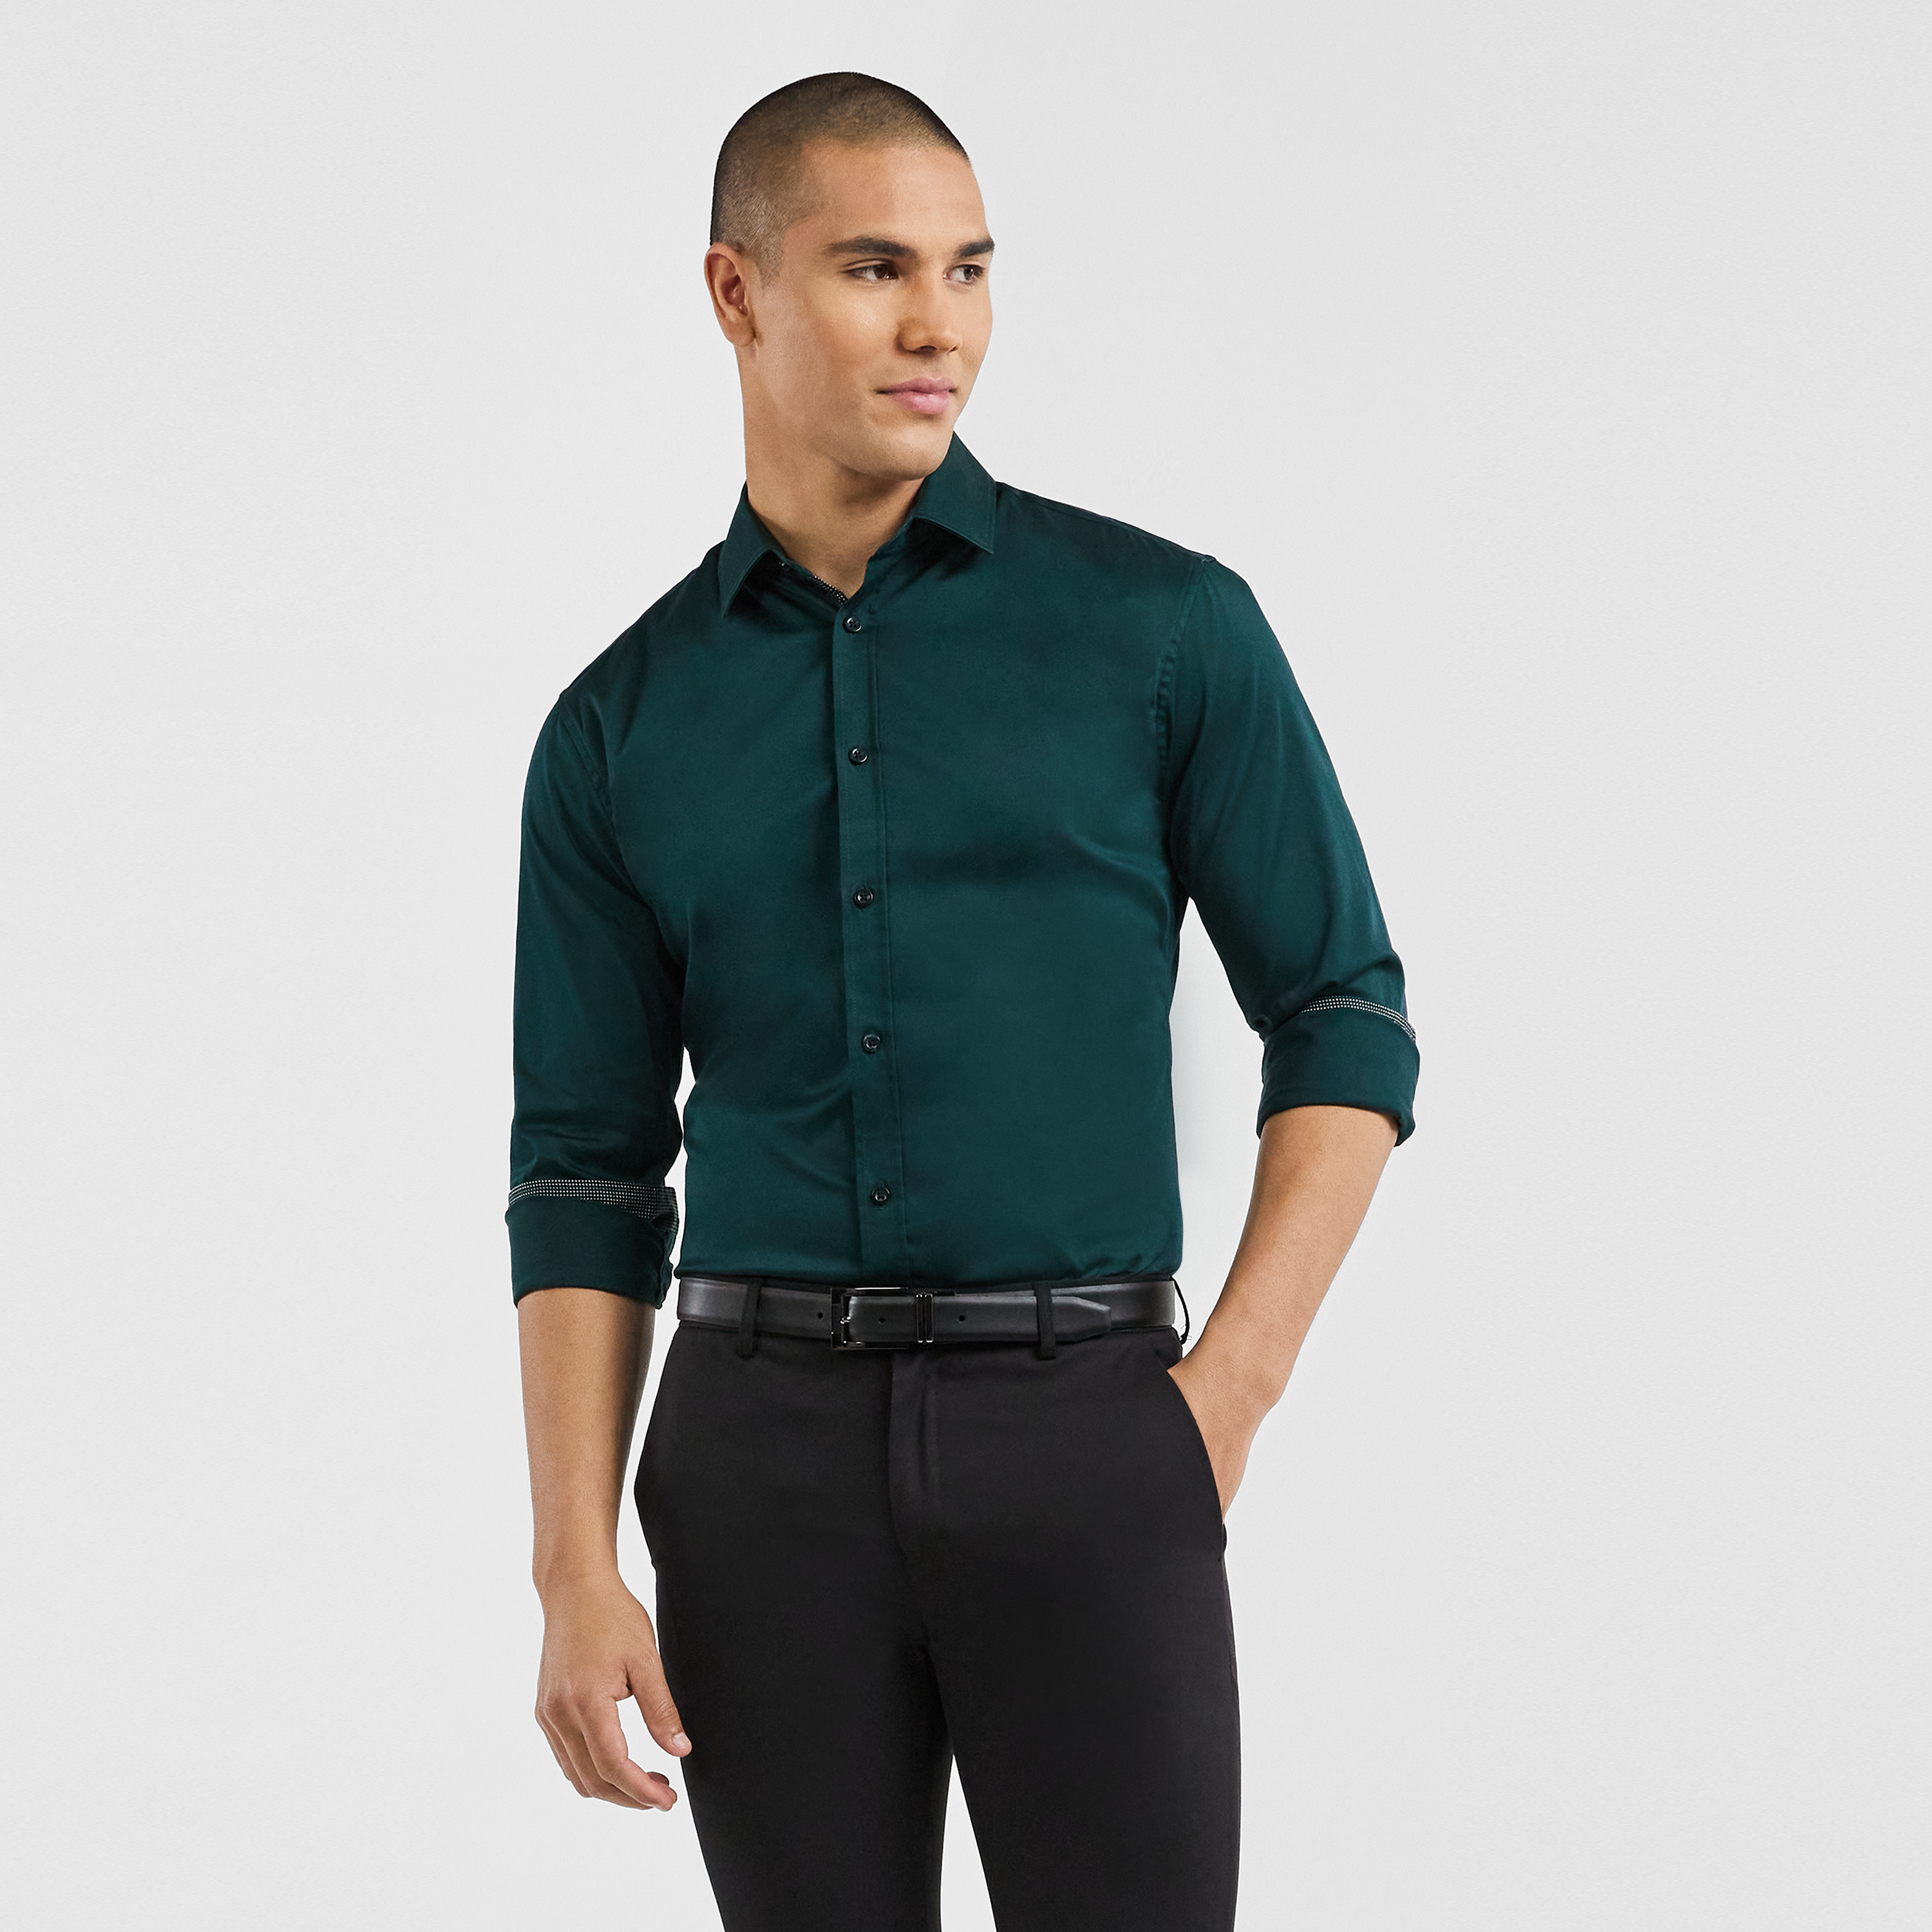 Buy Arrow Slim Fit Patterned Formal Shirt - NNNOW.com